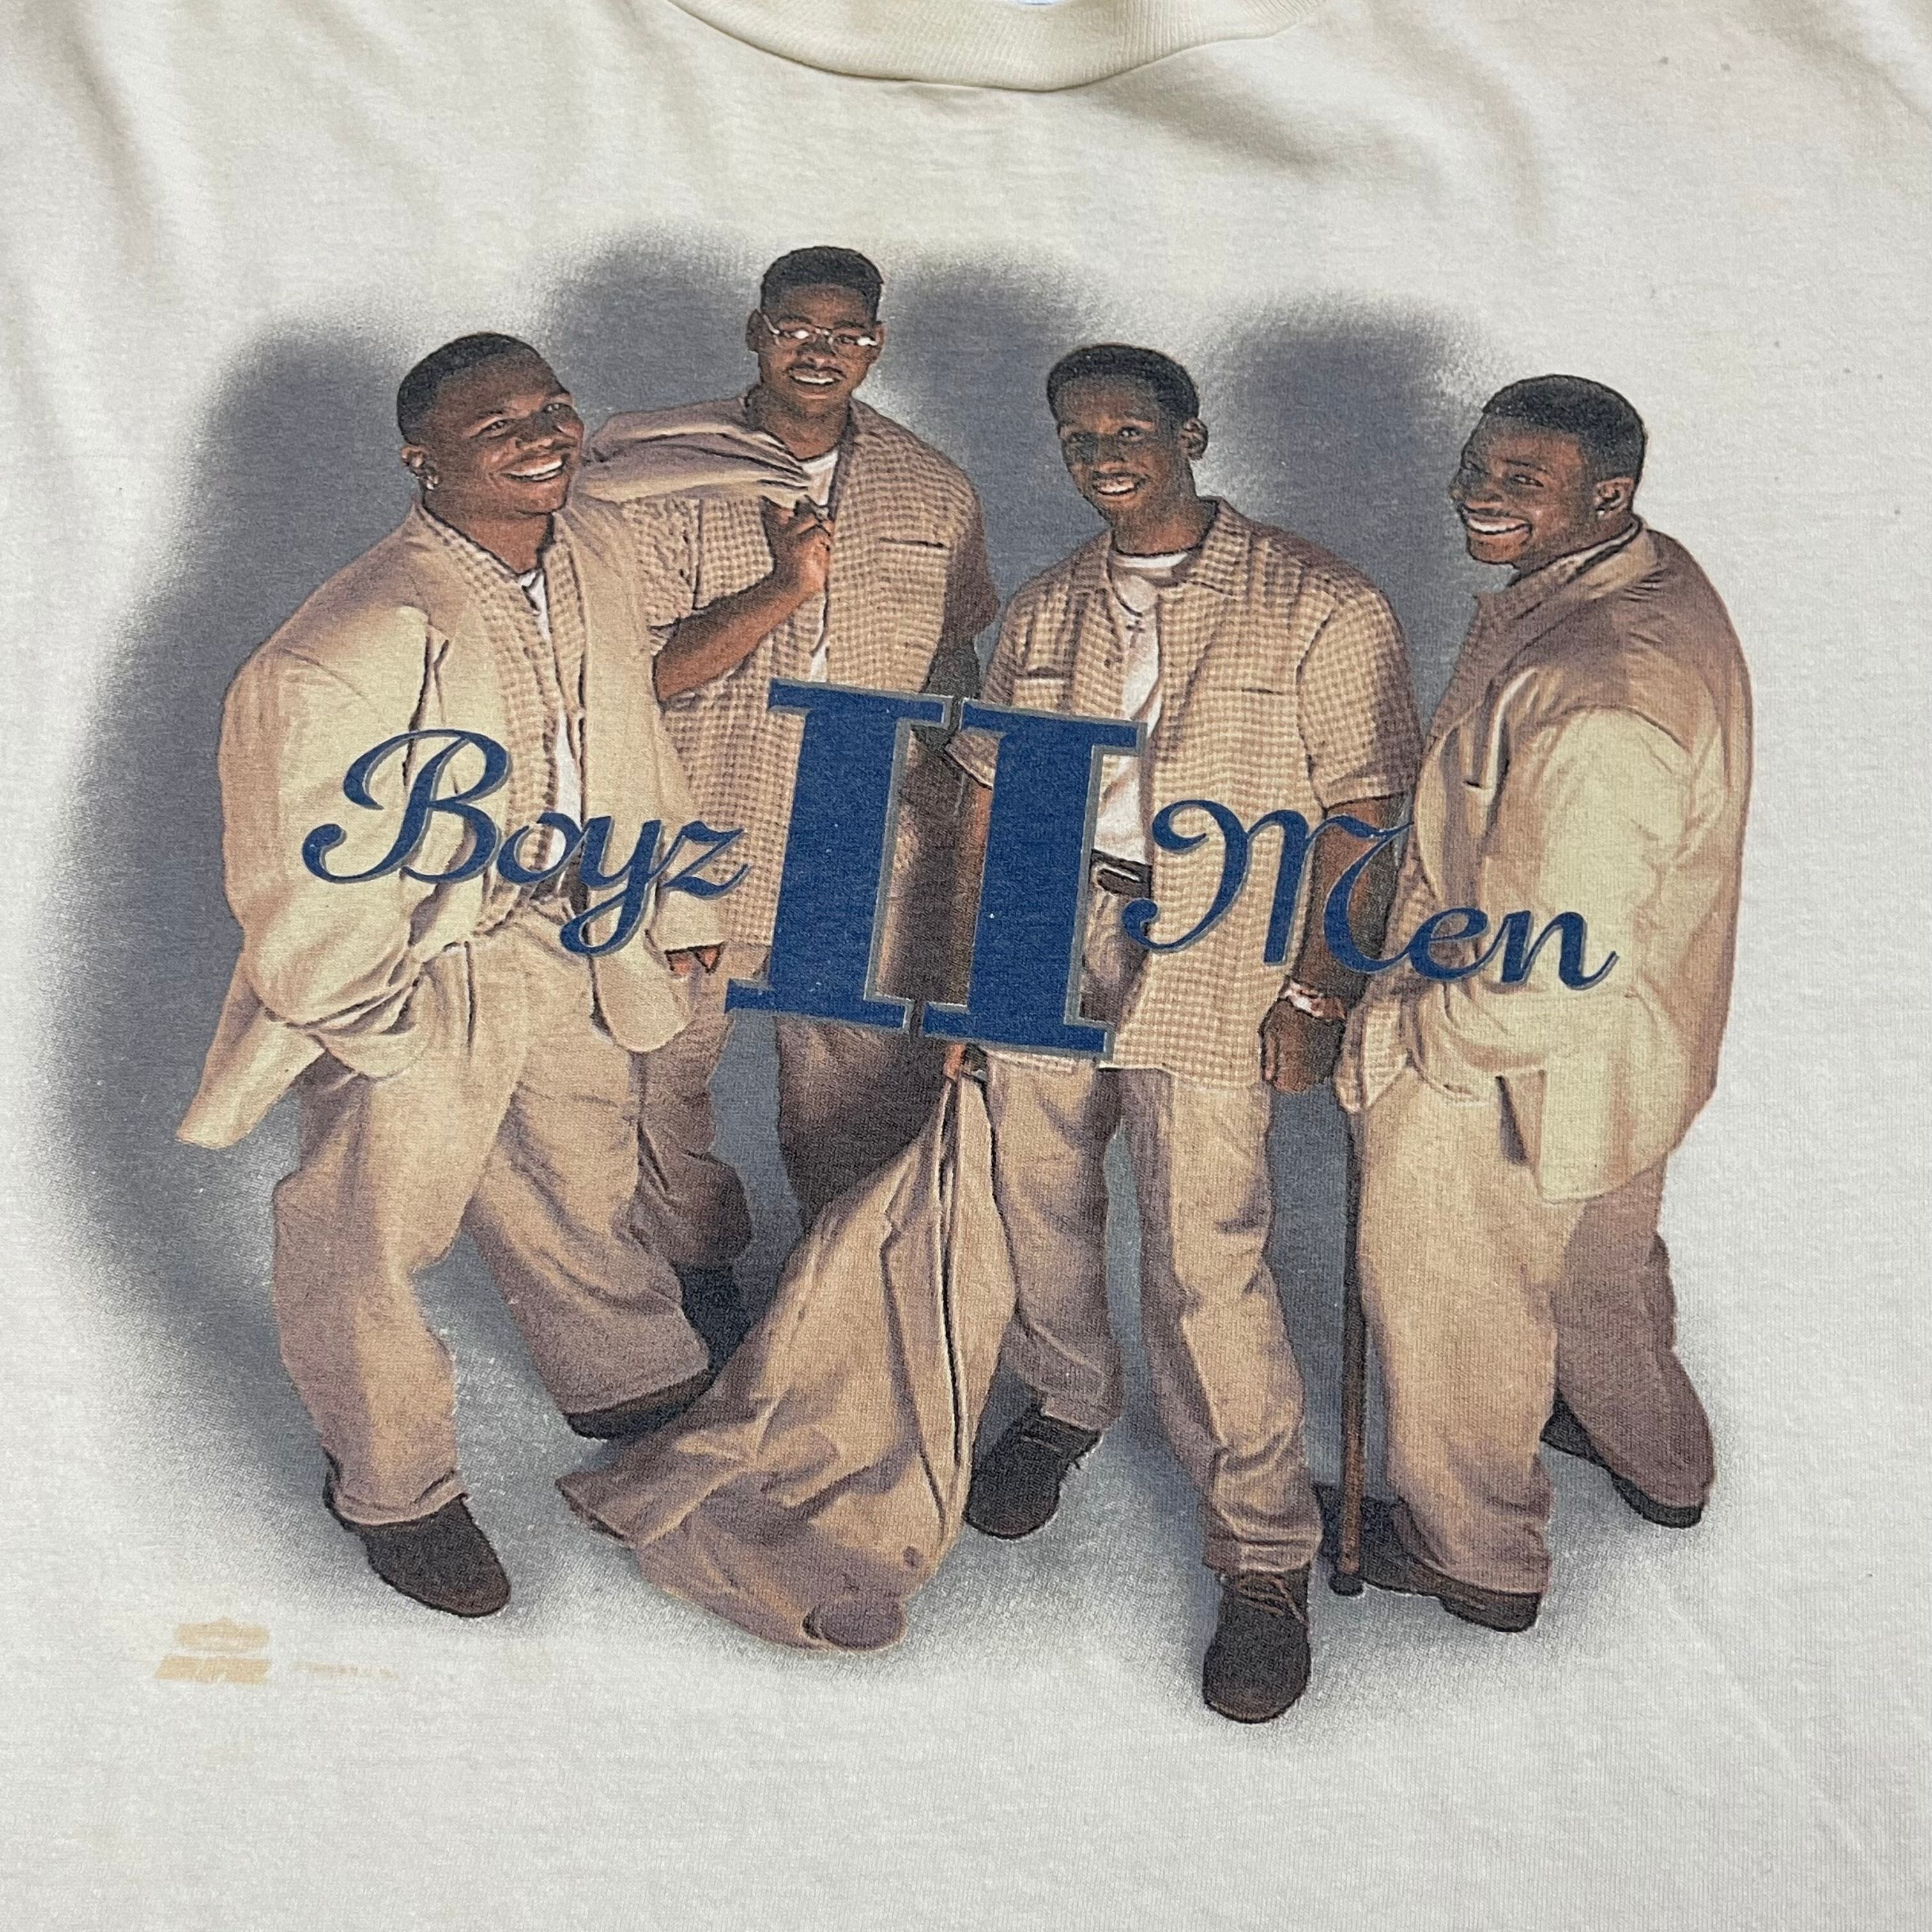 Boyz II Men 90s ヴィンテージTシャツ XL EVOLUTION